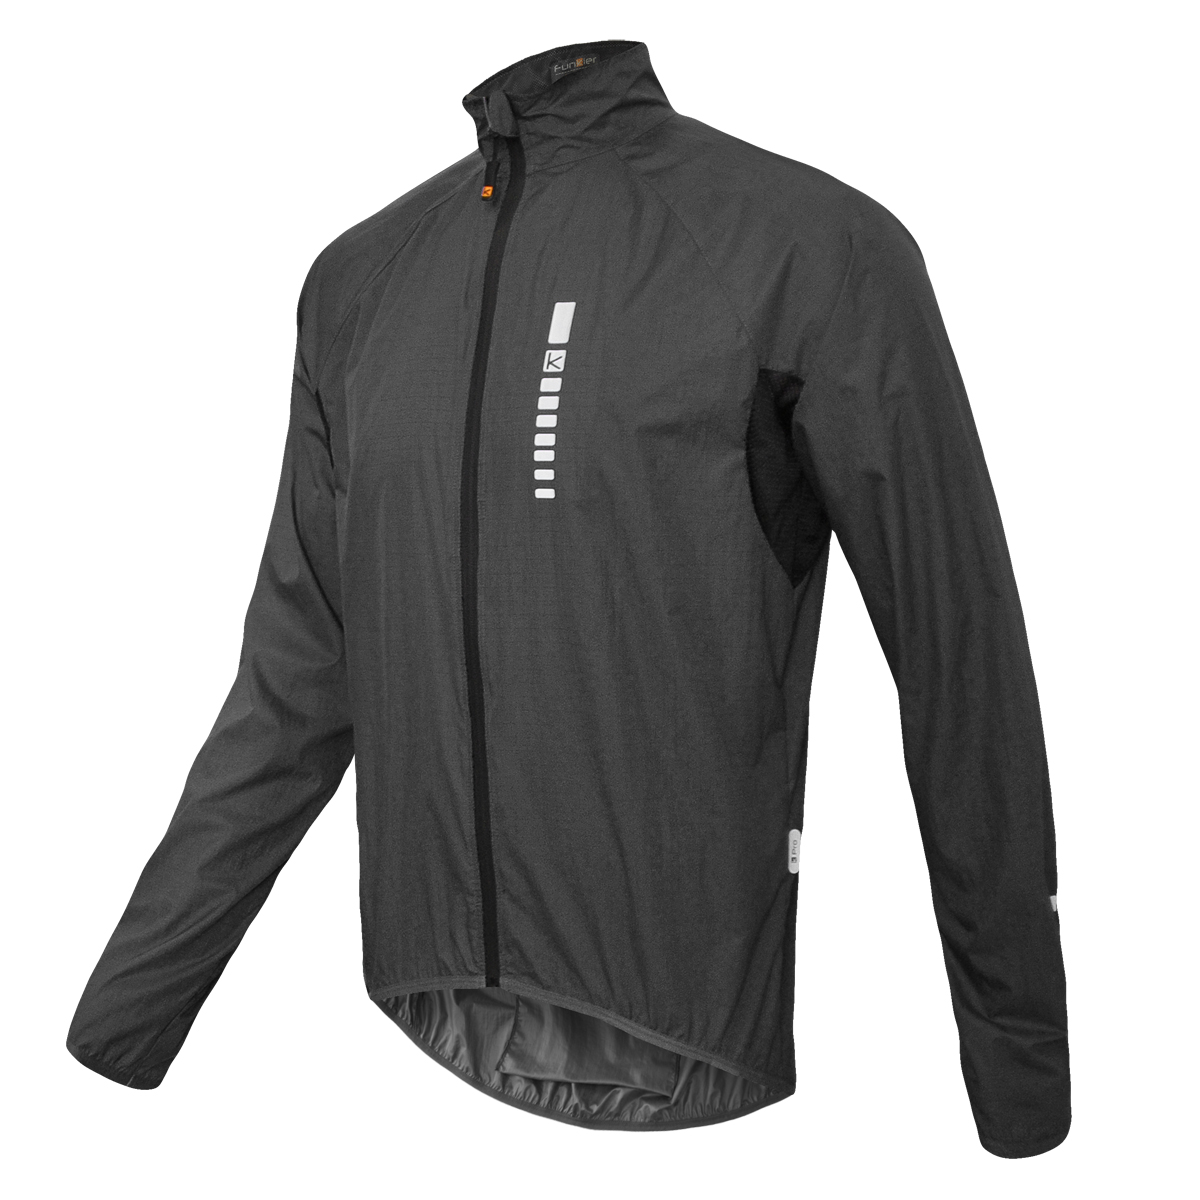 Funkier DryRide Pro Showerproof Cycling Jacket | Merlin Cycles